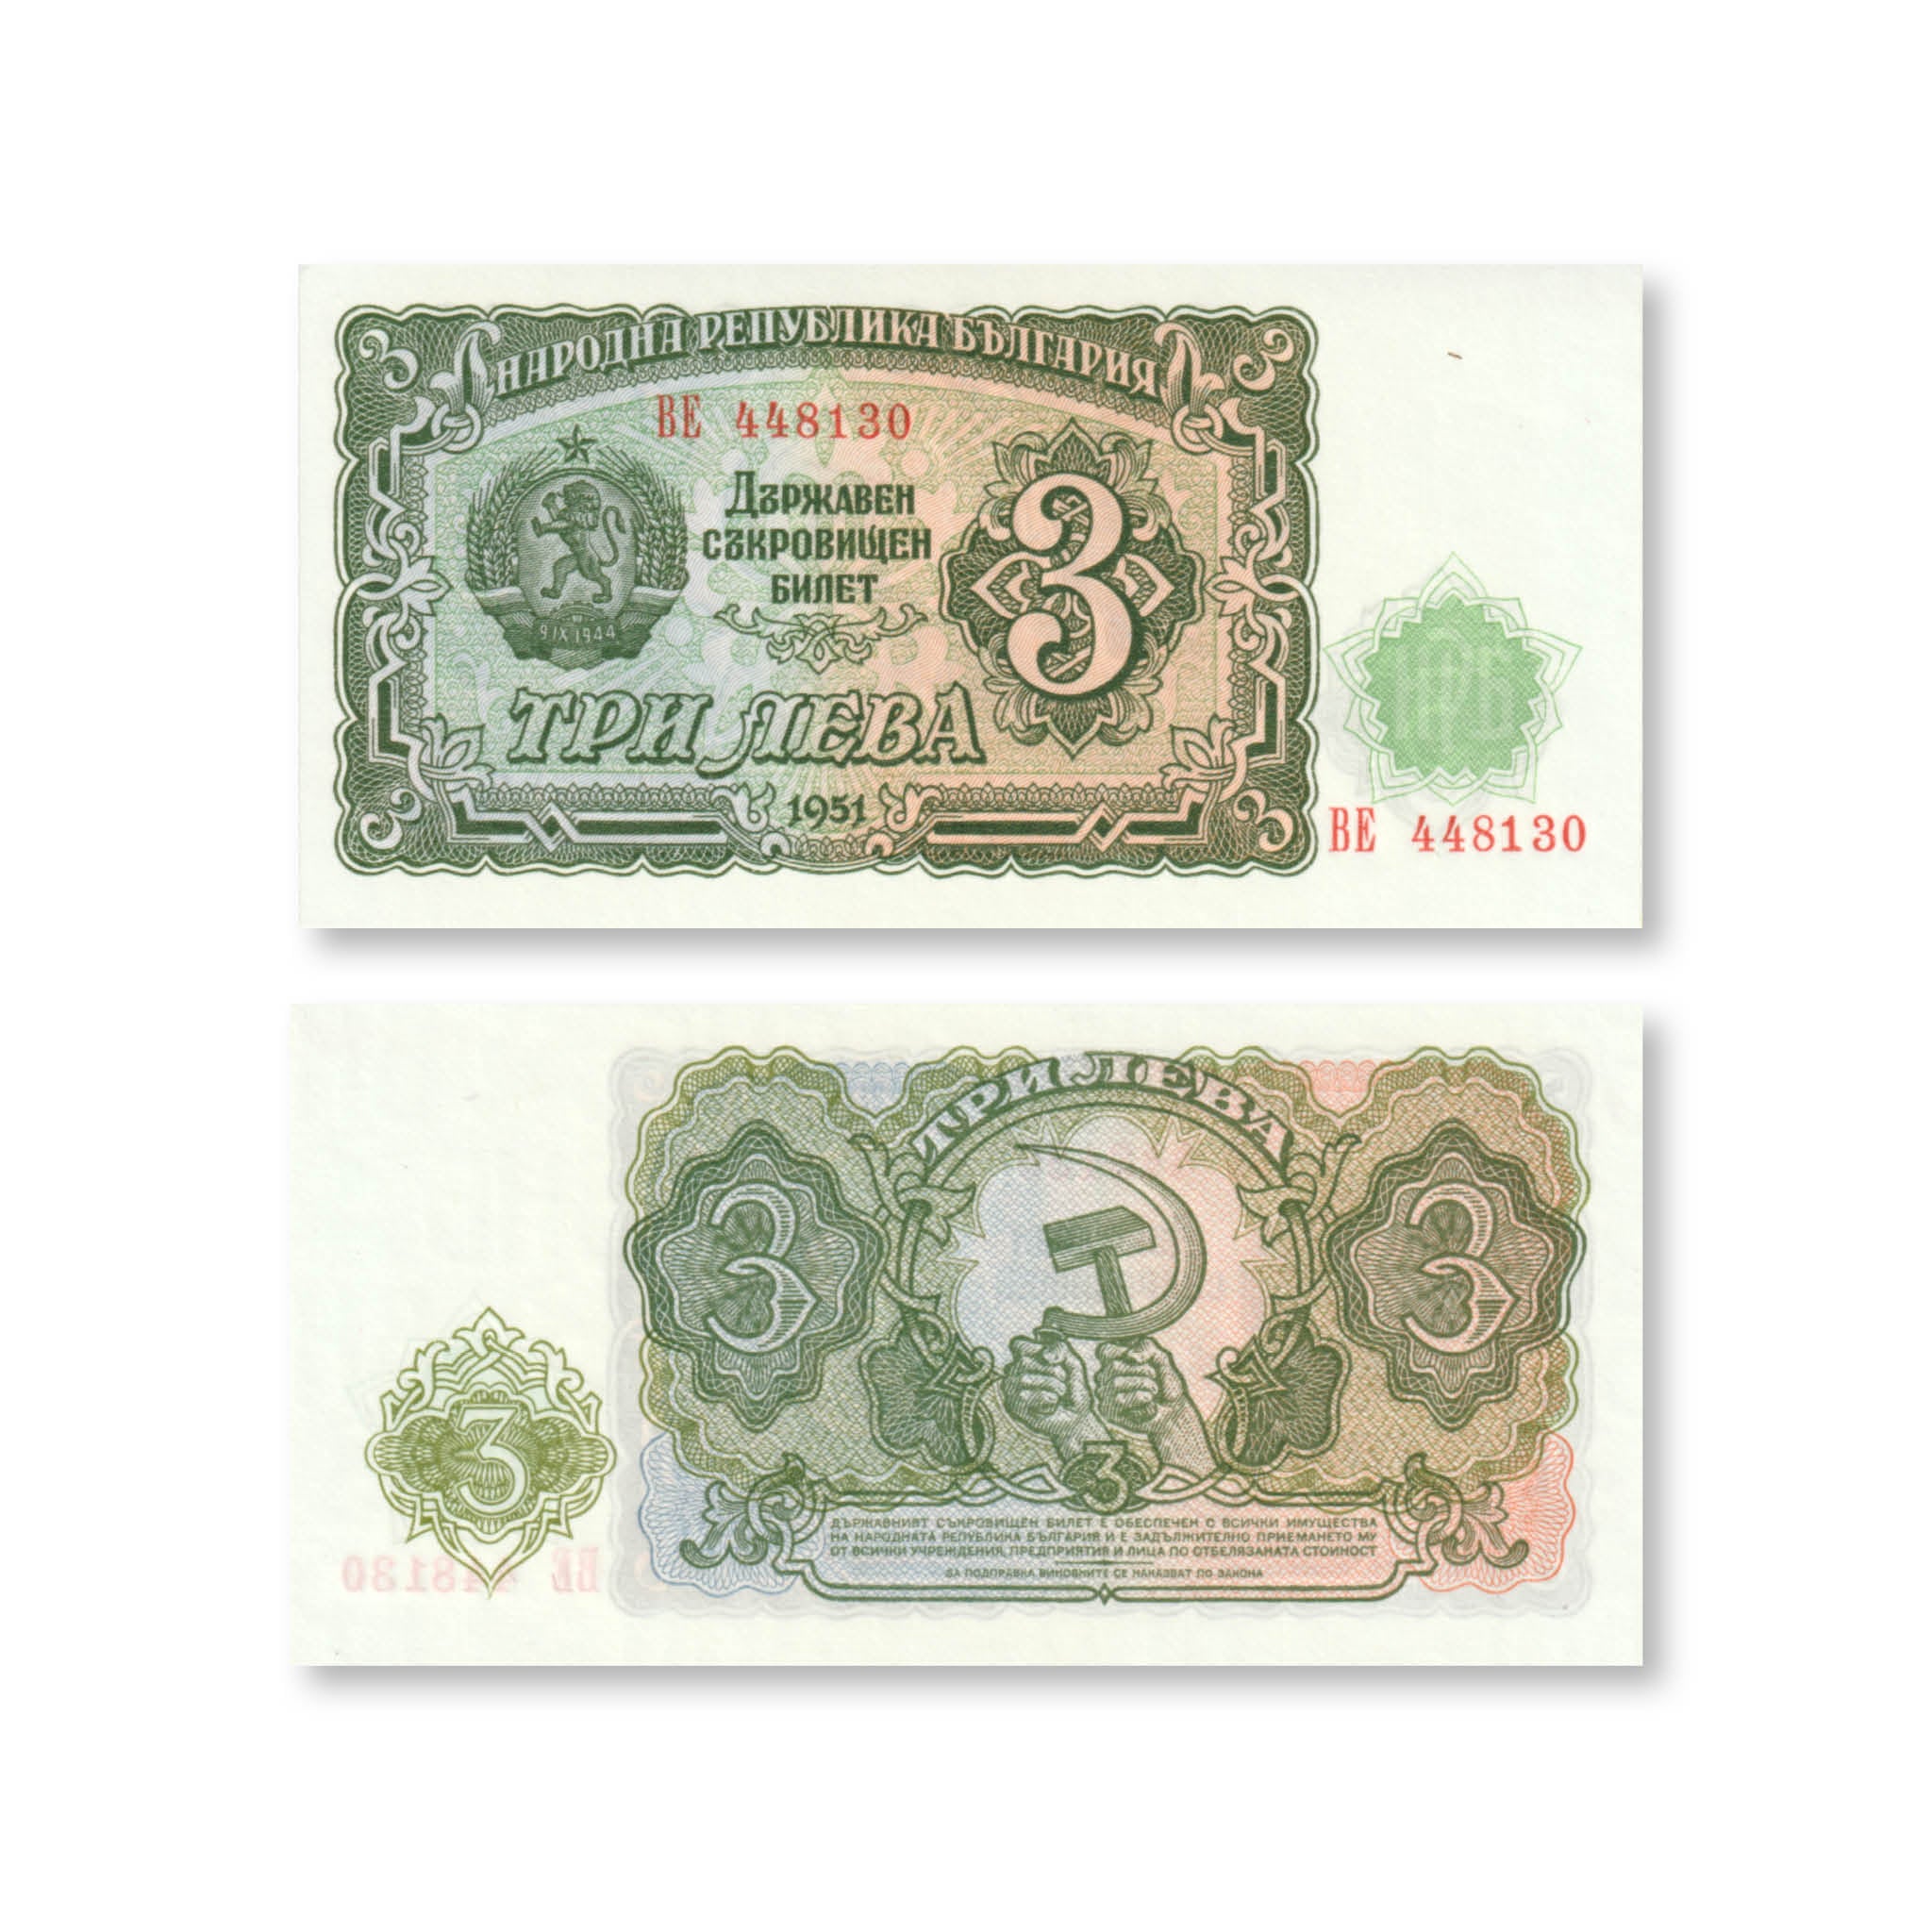 Bulgaria 3 Leva, 1951, B188a, P81, UNC - Robert's World Money - World Banknotes